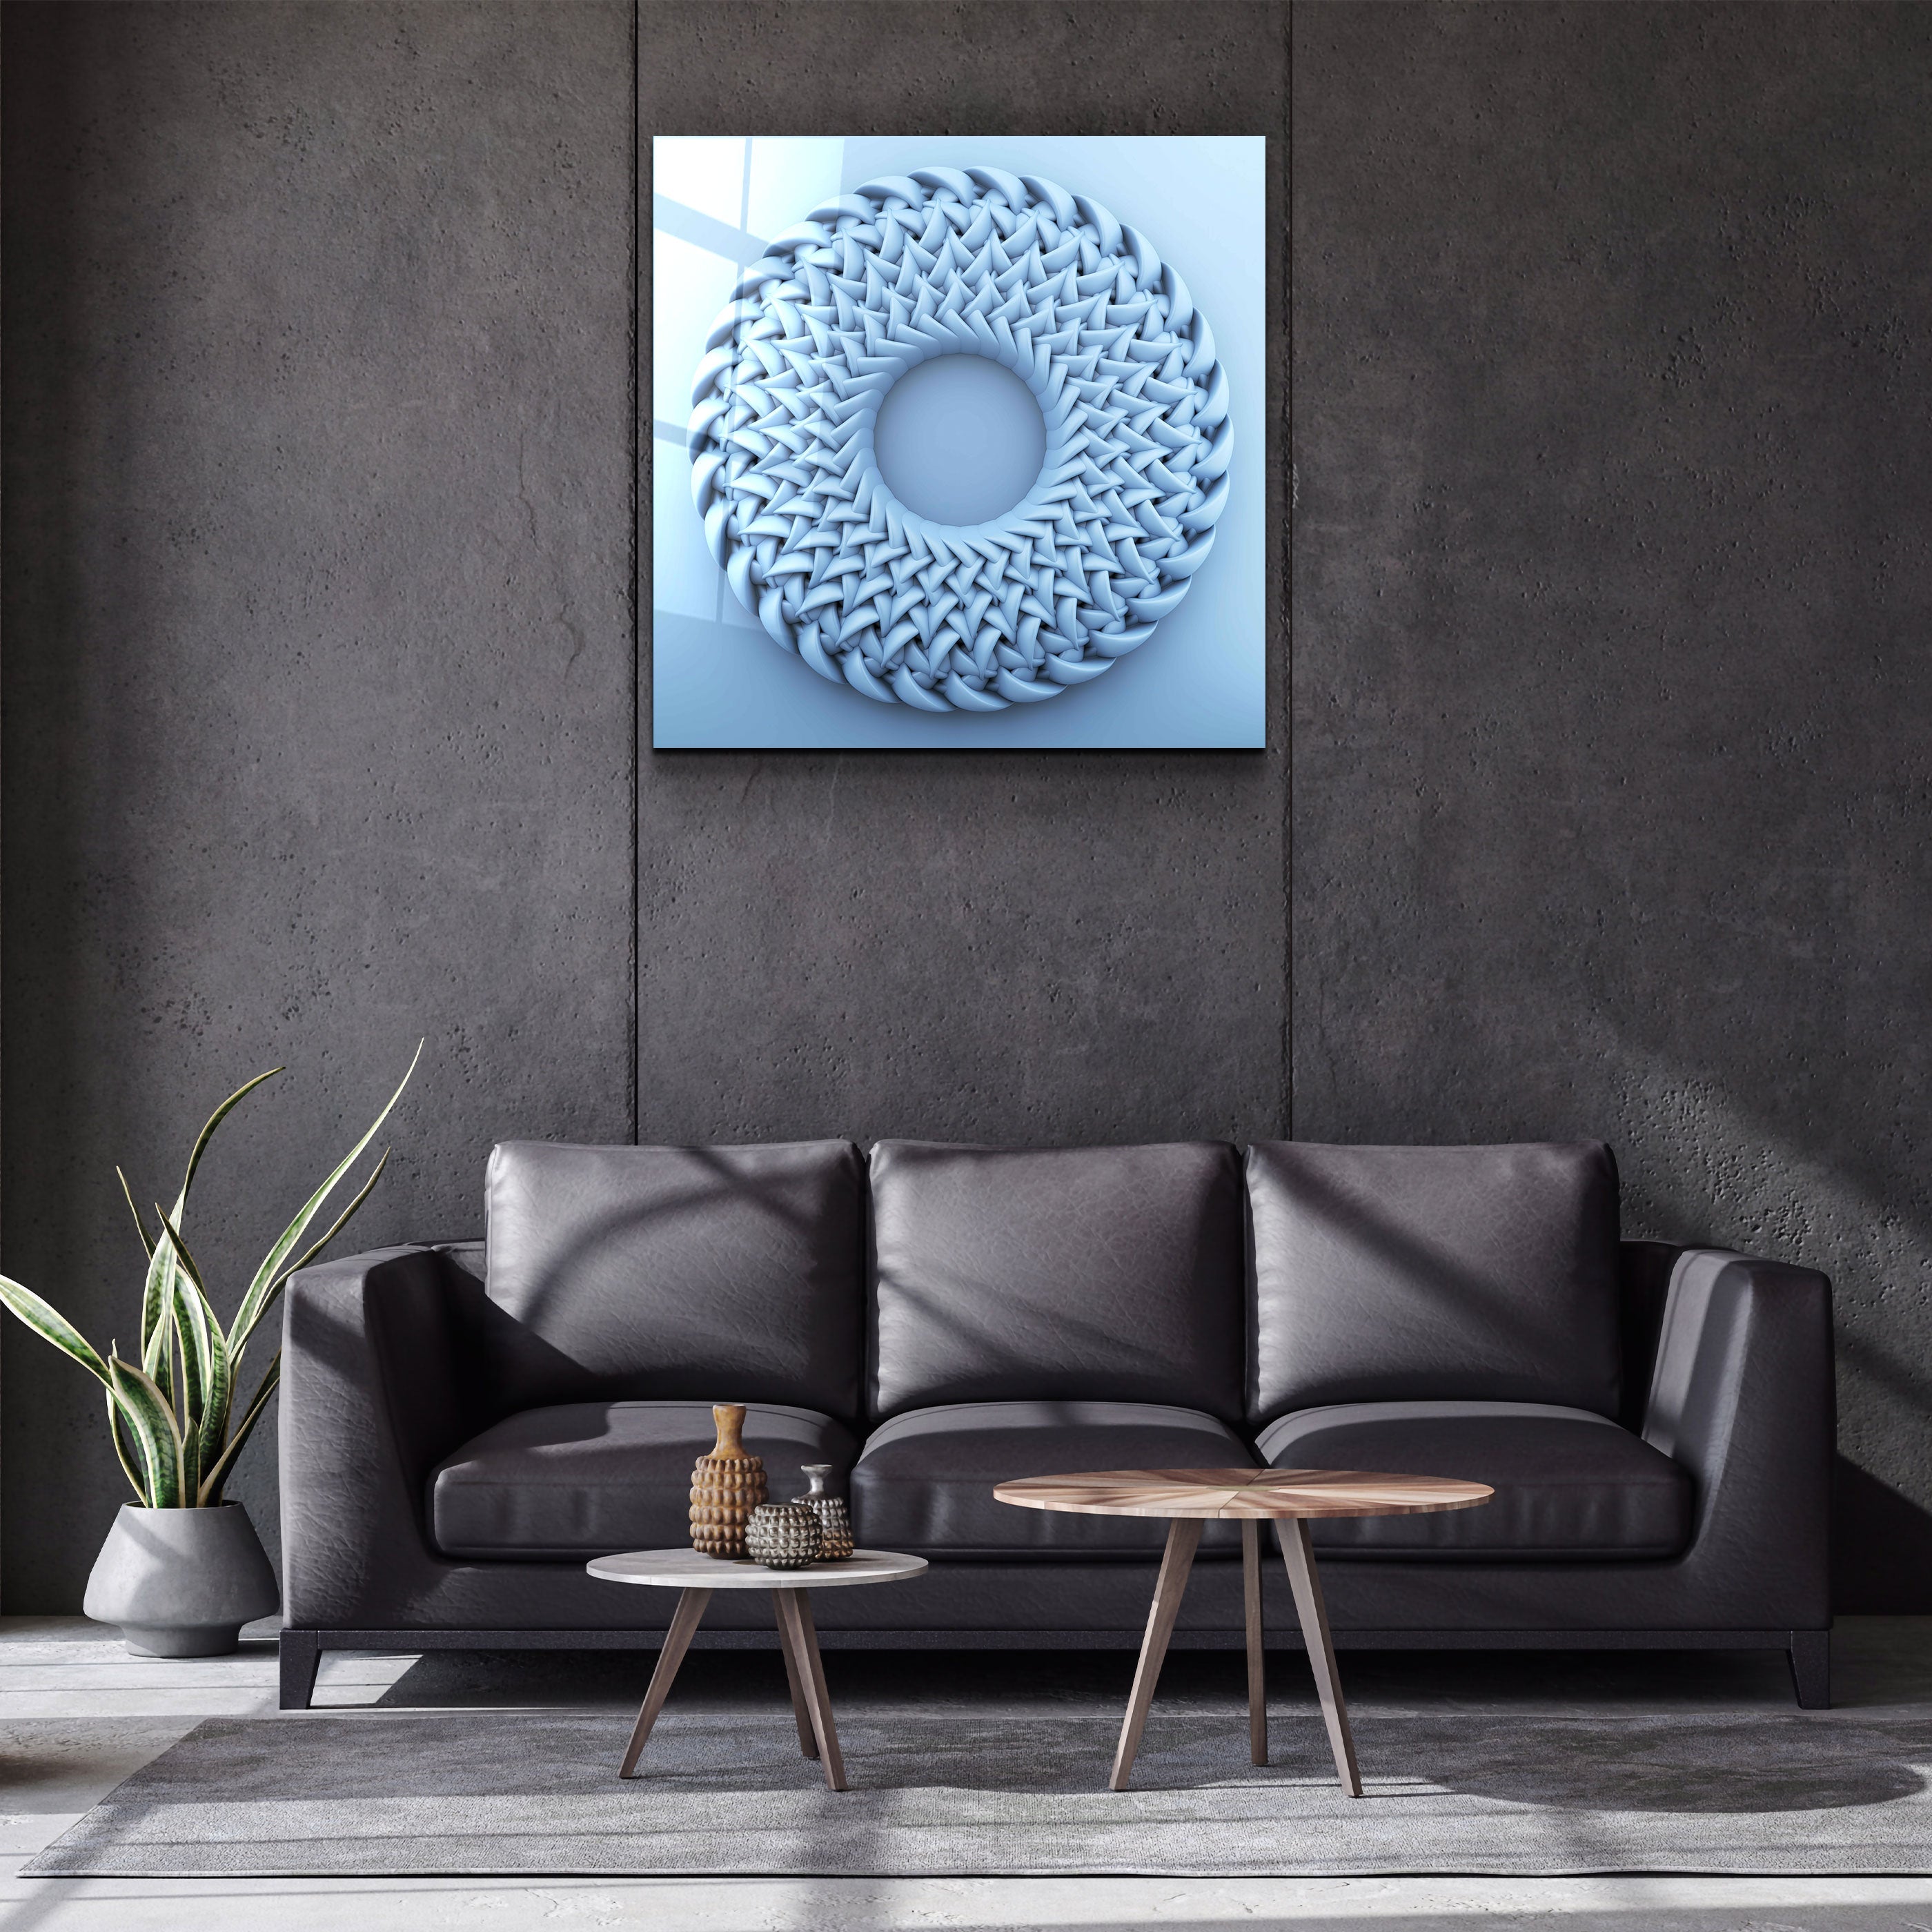 ."Abstract Circular Knitting". Designer's Collection Glass Wall Art